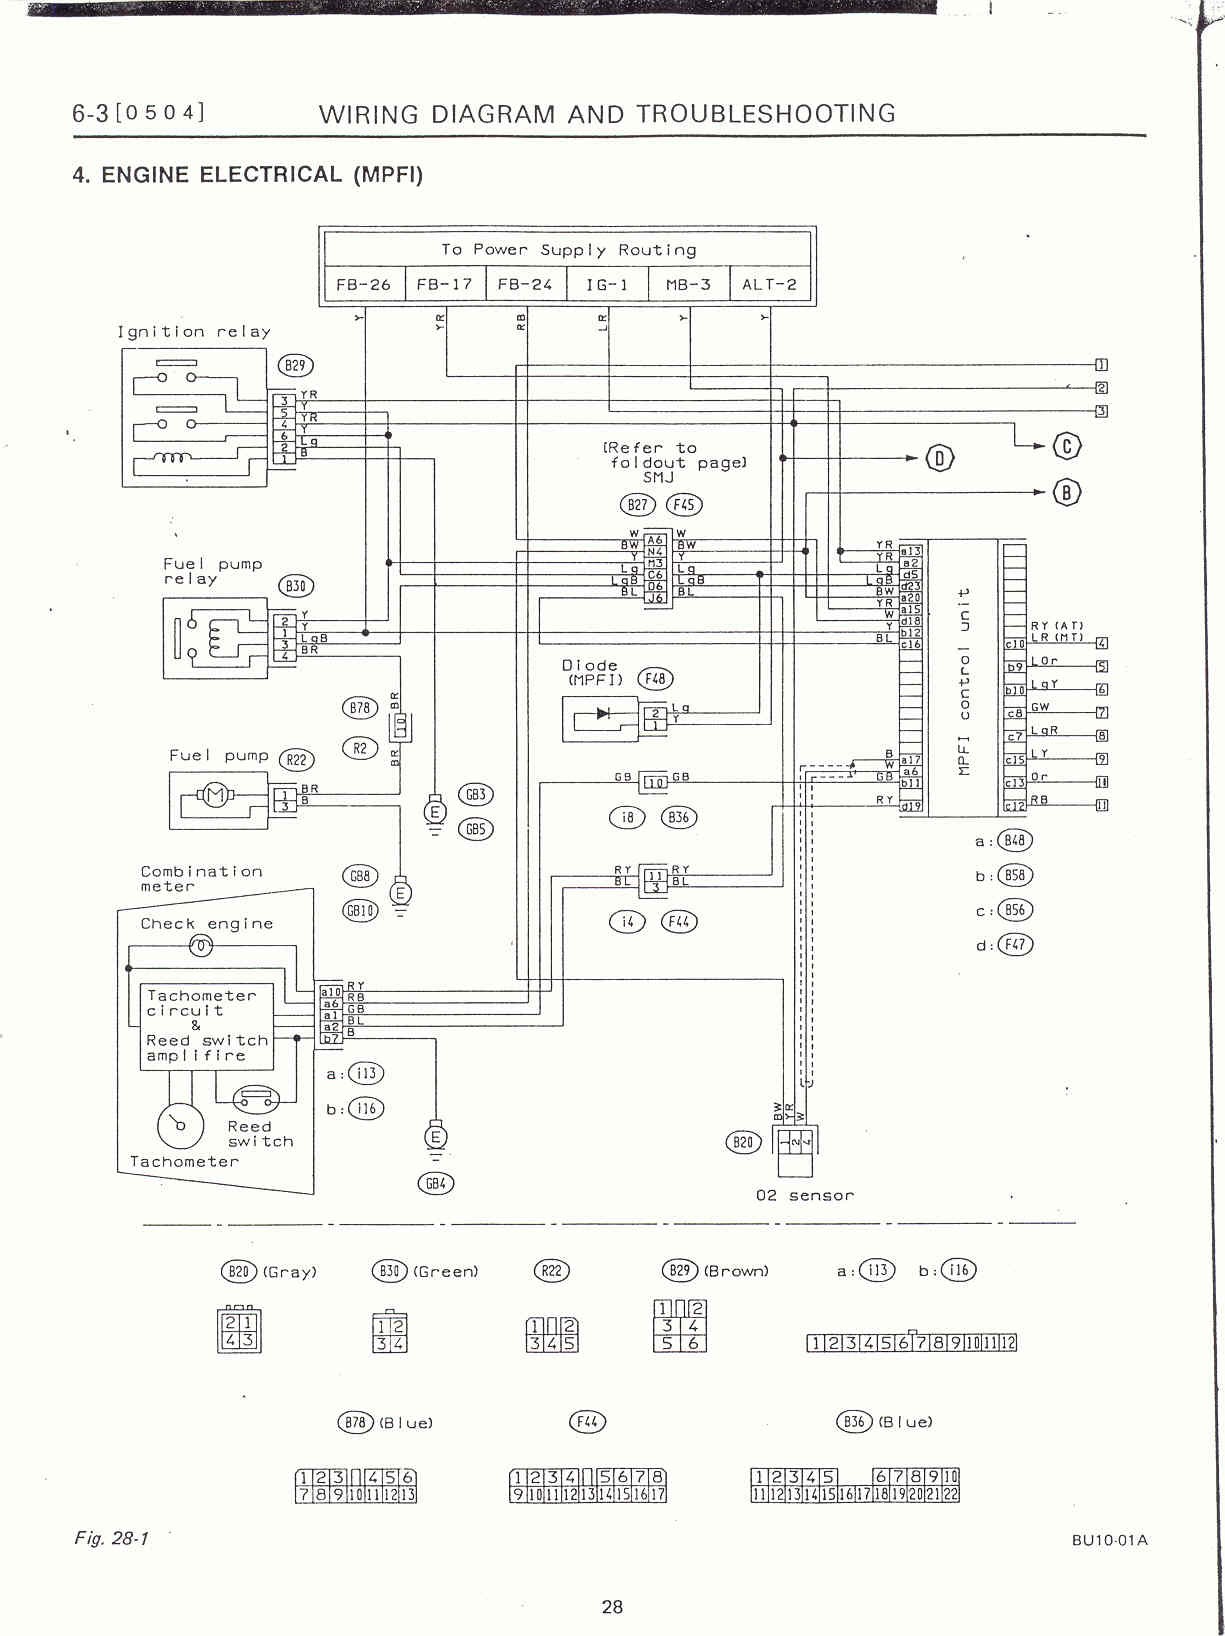 Subaru Ignition Switch Wiring Diagram - Wiring Diagram